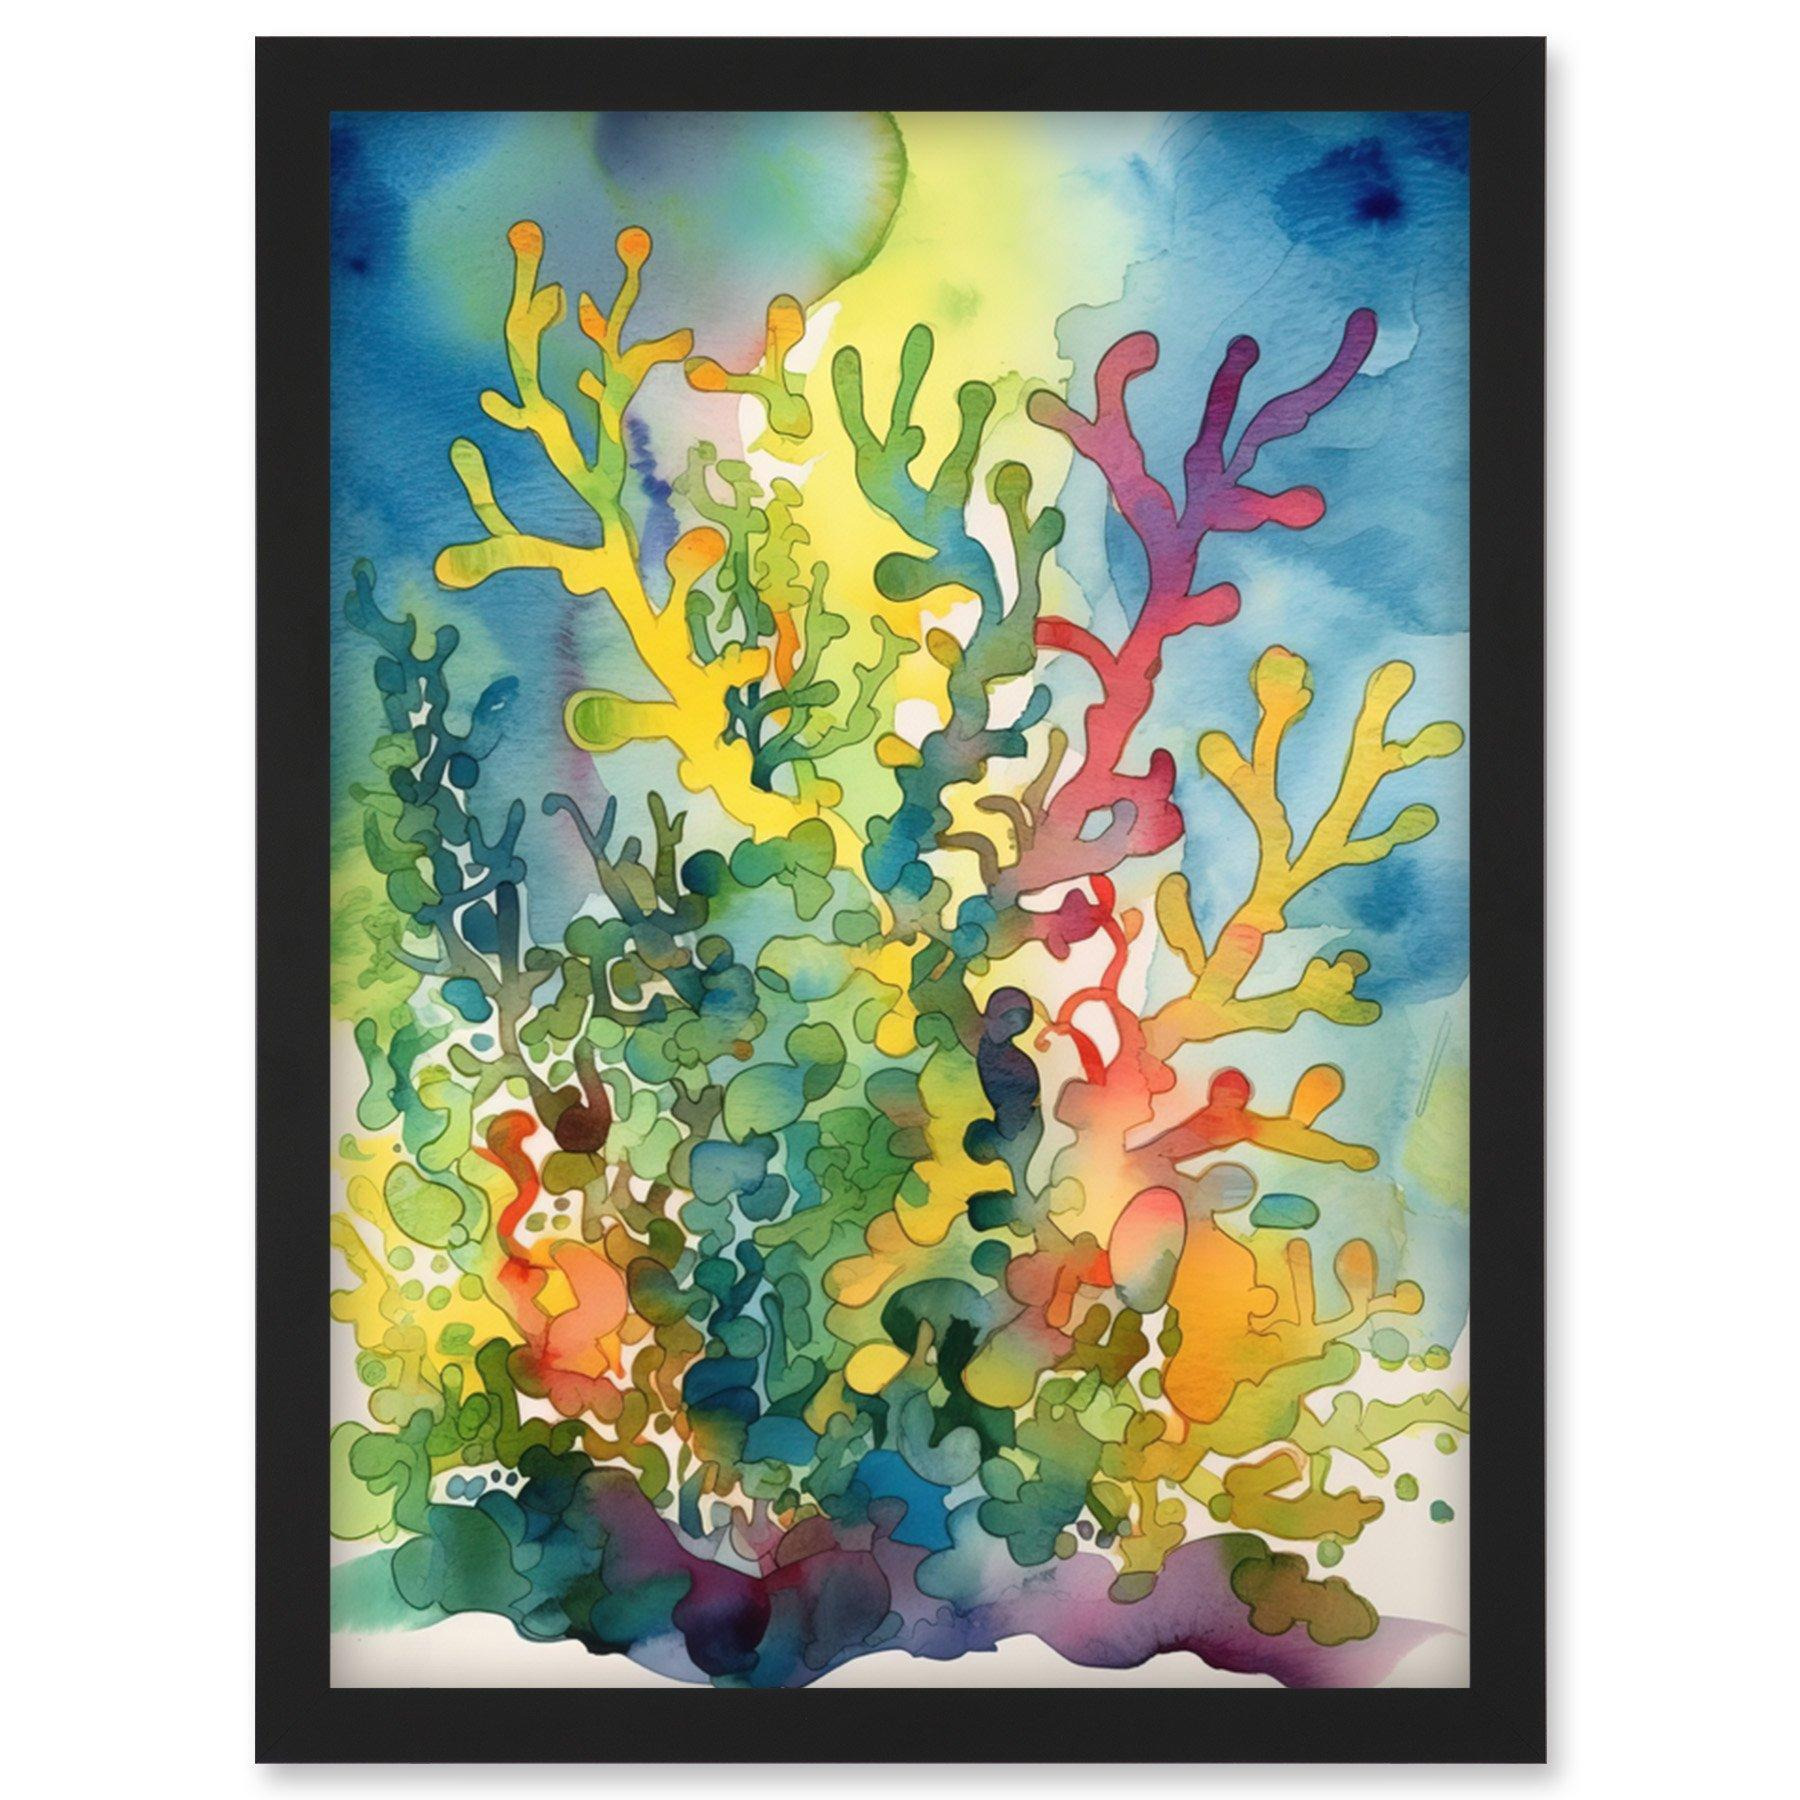 Staghorn Coral Reef Folk Art Artwork Framed Wall Art Print A4 - image 1